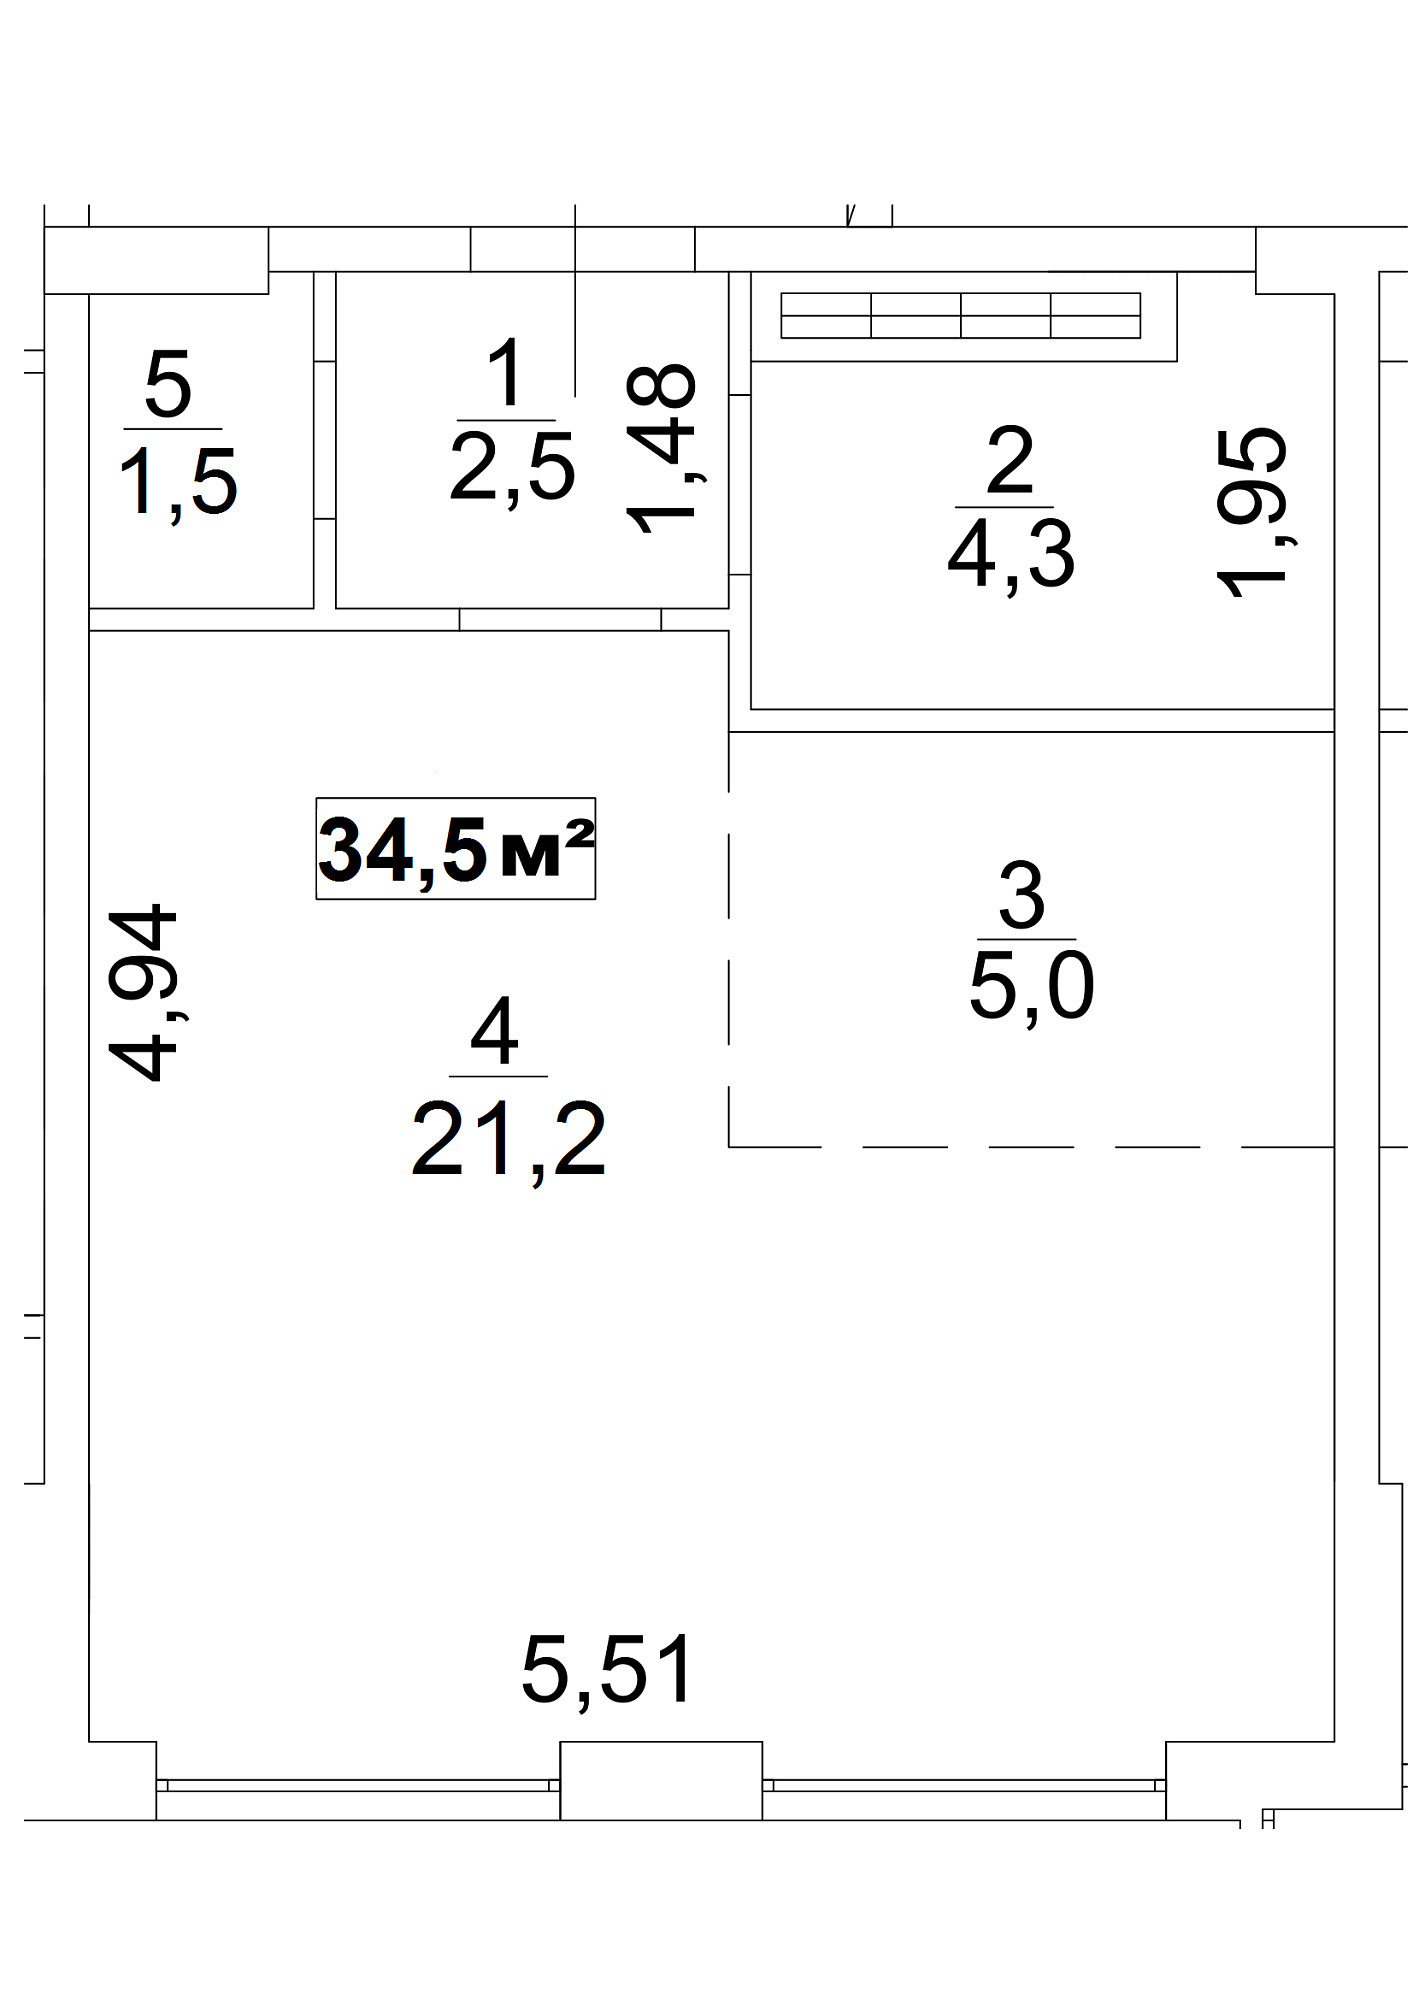 Planning Smart flats area 34.5m2, AB-13-04/00026.